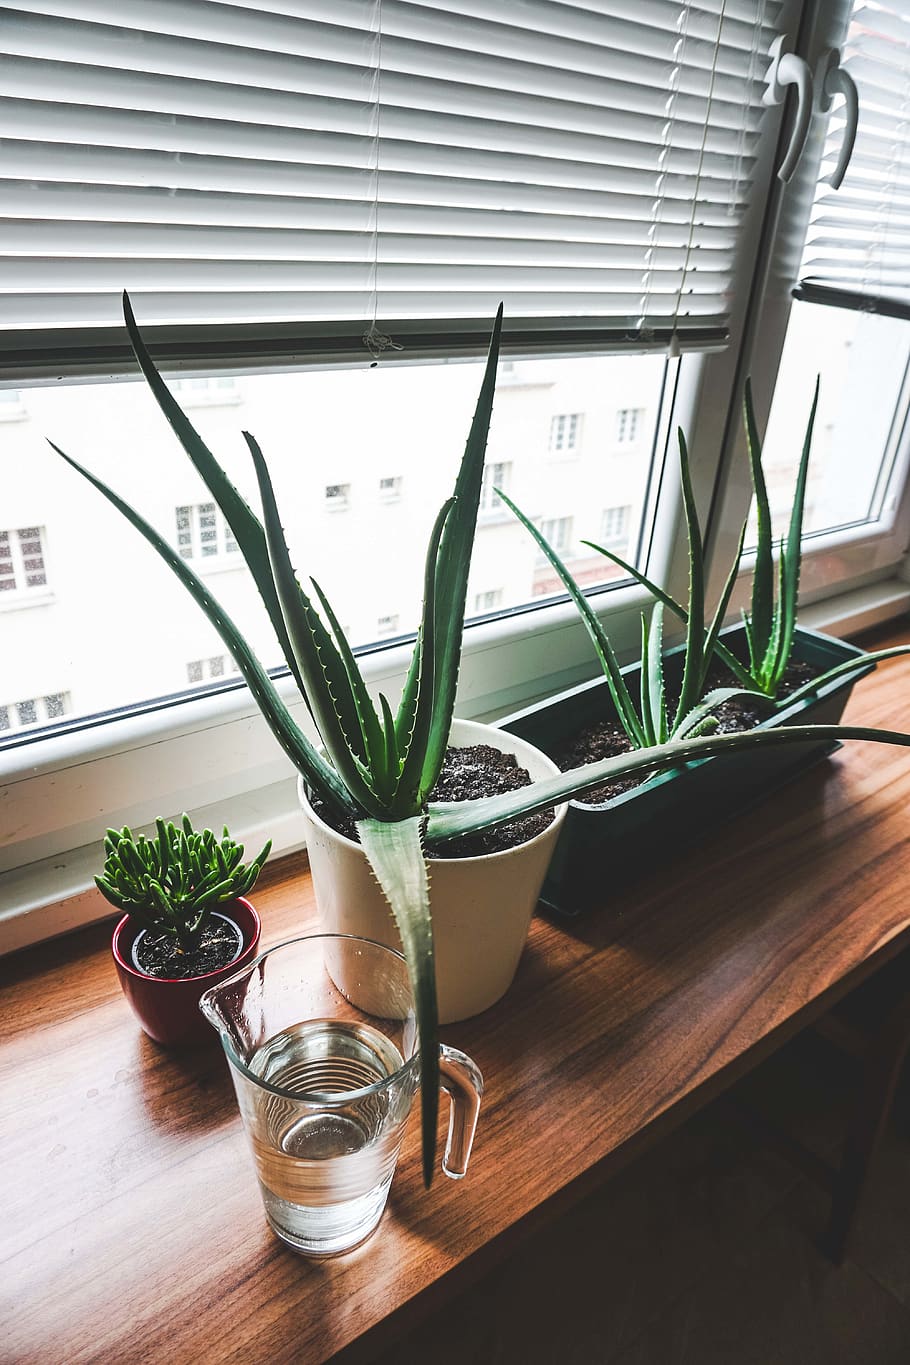 clear glass mug beside Aloe vera plants on window, potted plant